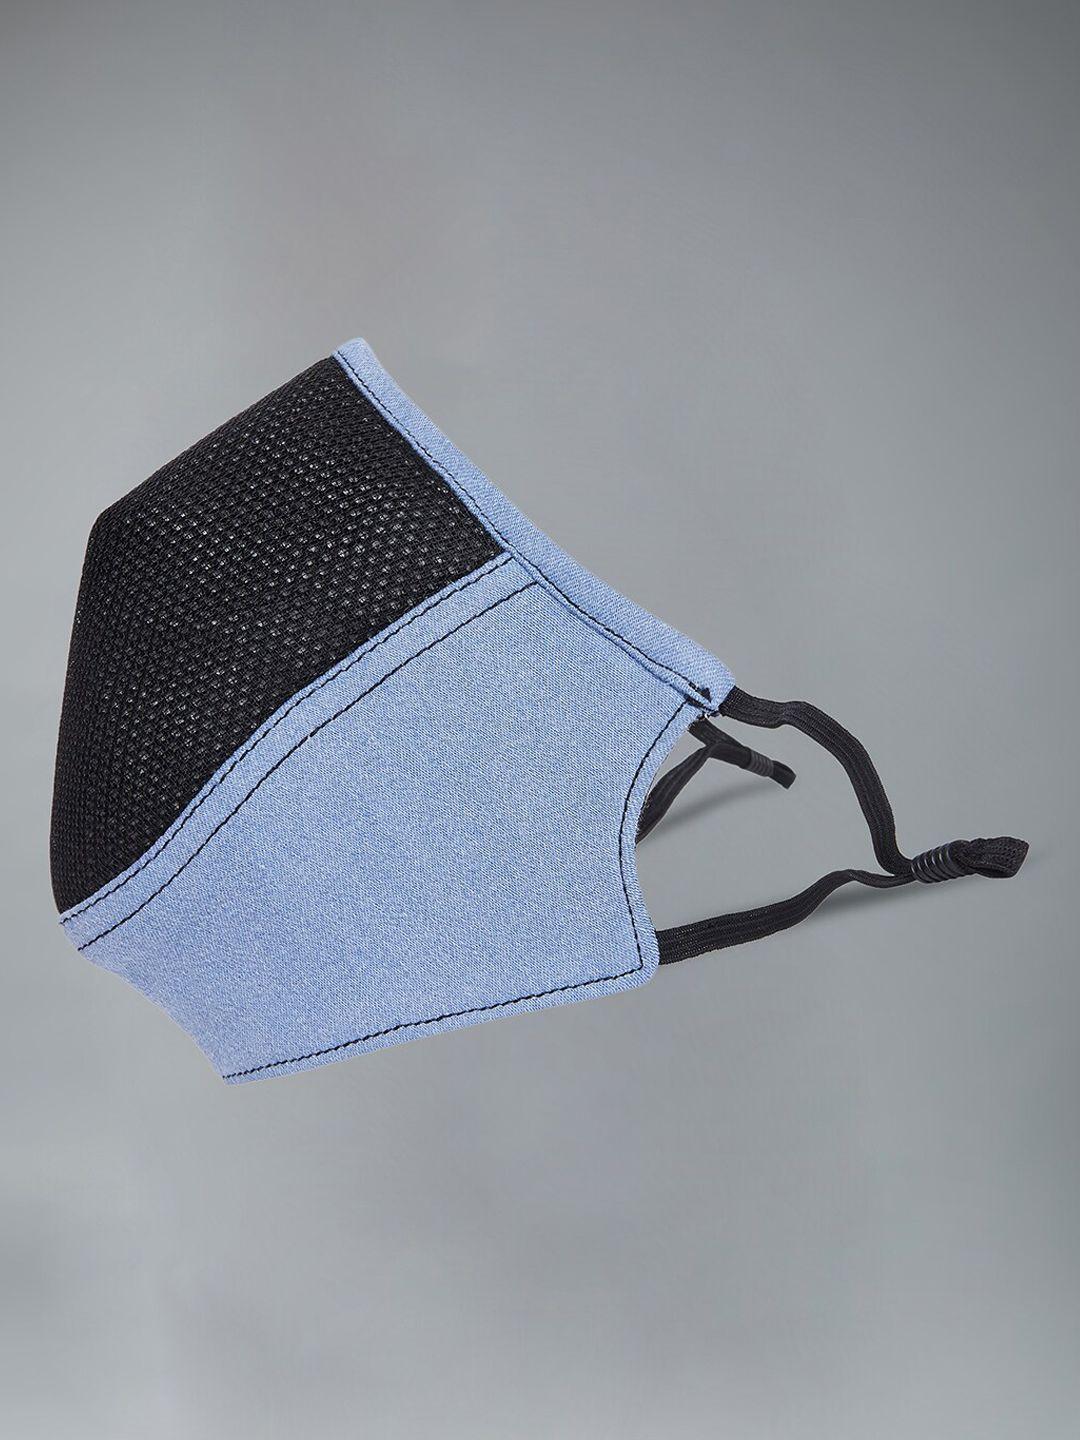 dolce crudo unisex blue & black 7-ply protective outdoor denim mesh masks